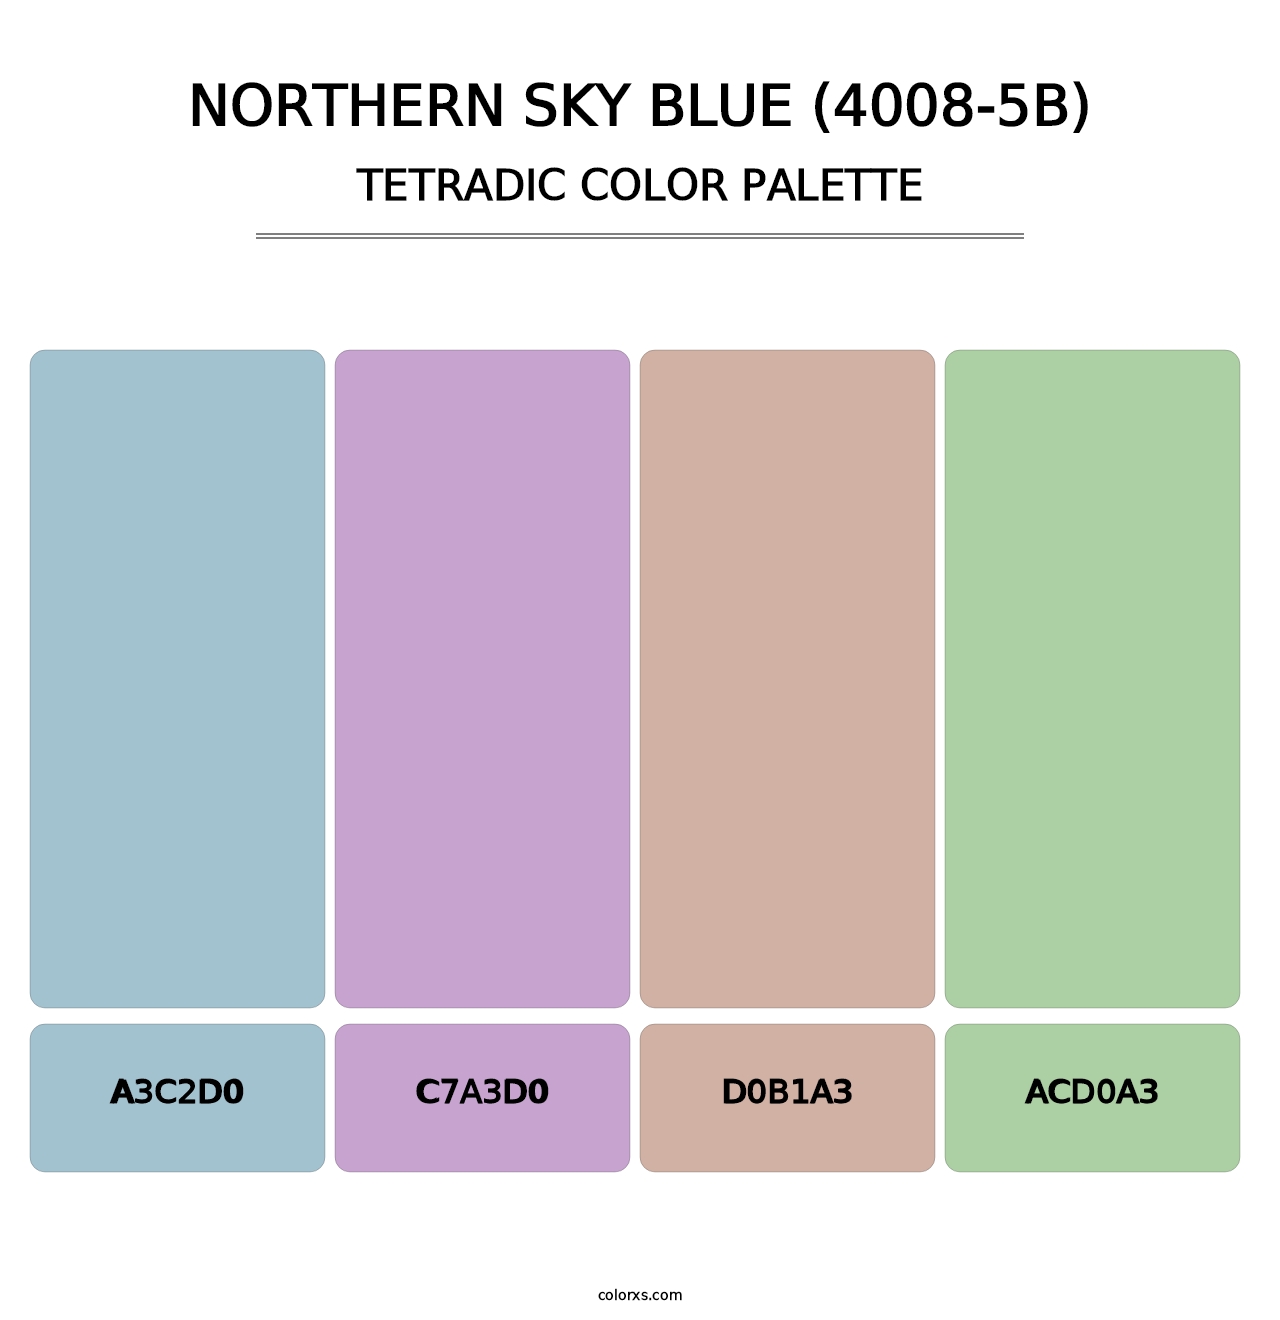 Northern Sky Blue (4008-5B) - Tetradic Color Palette